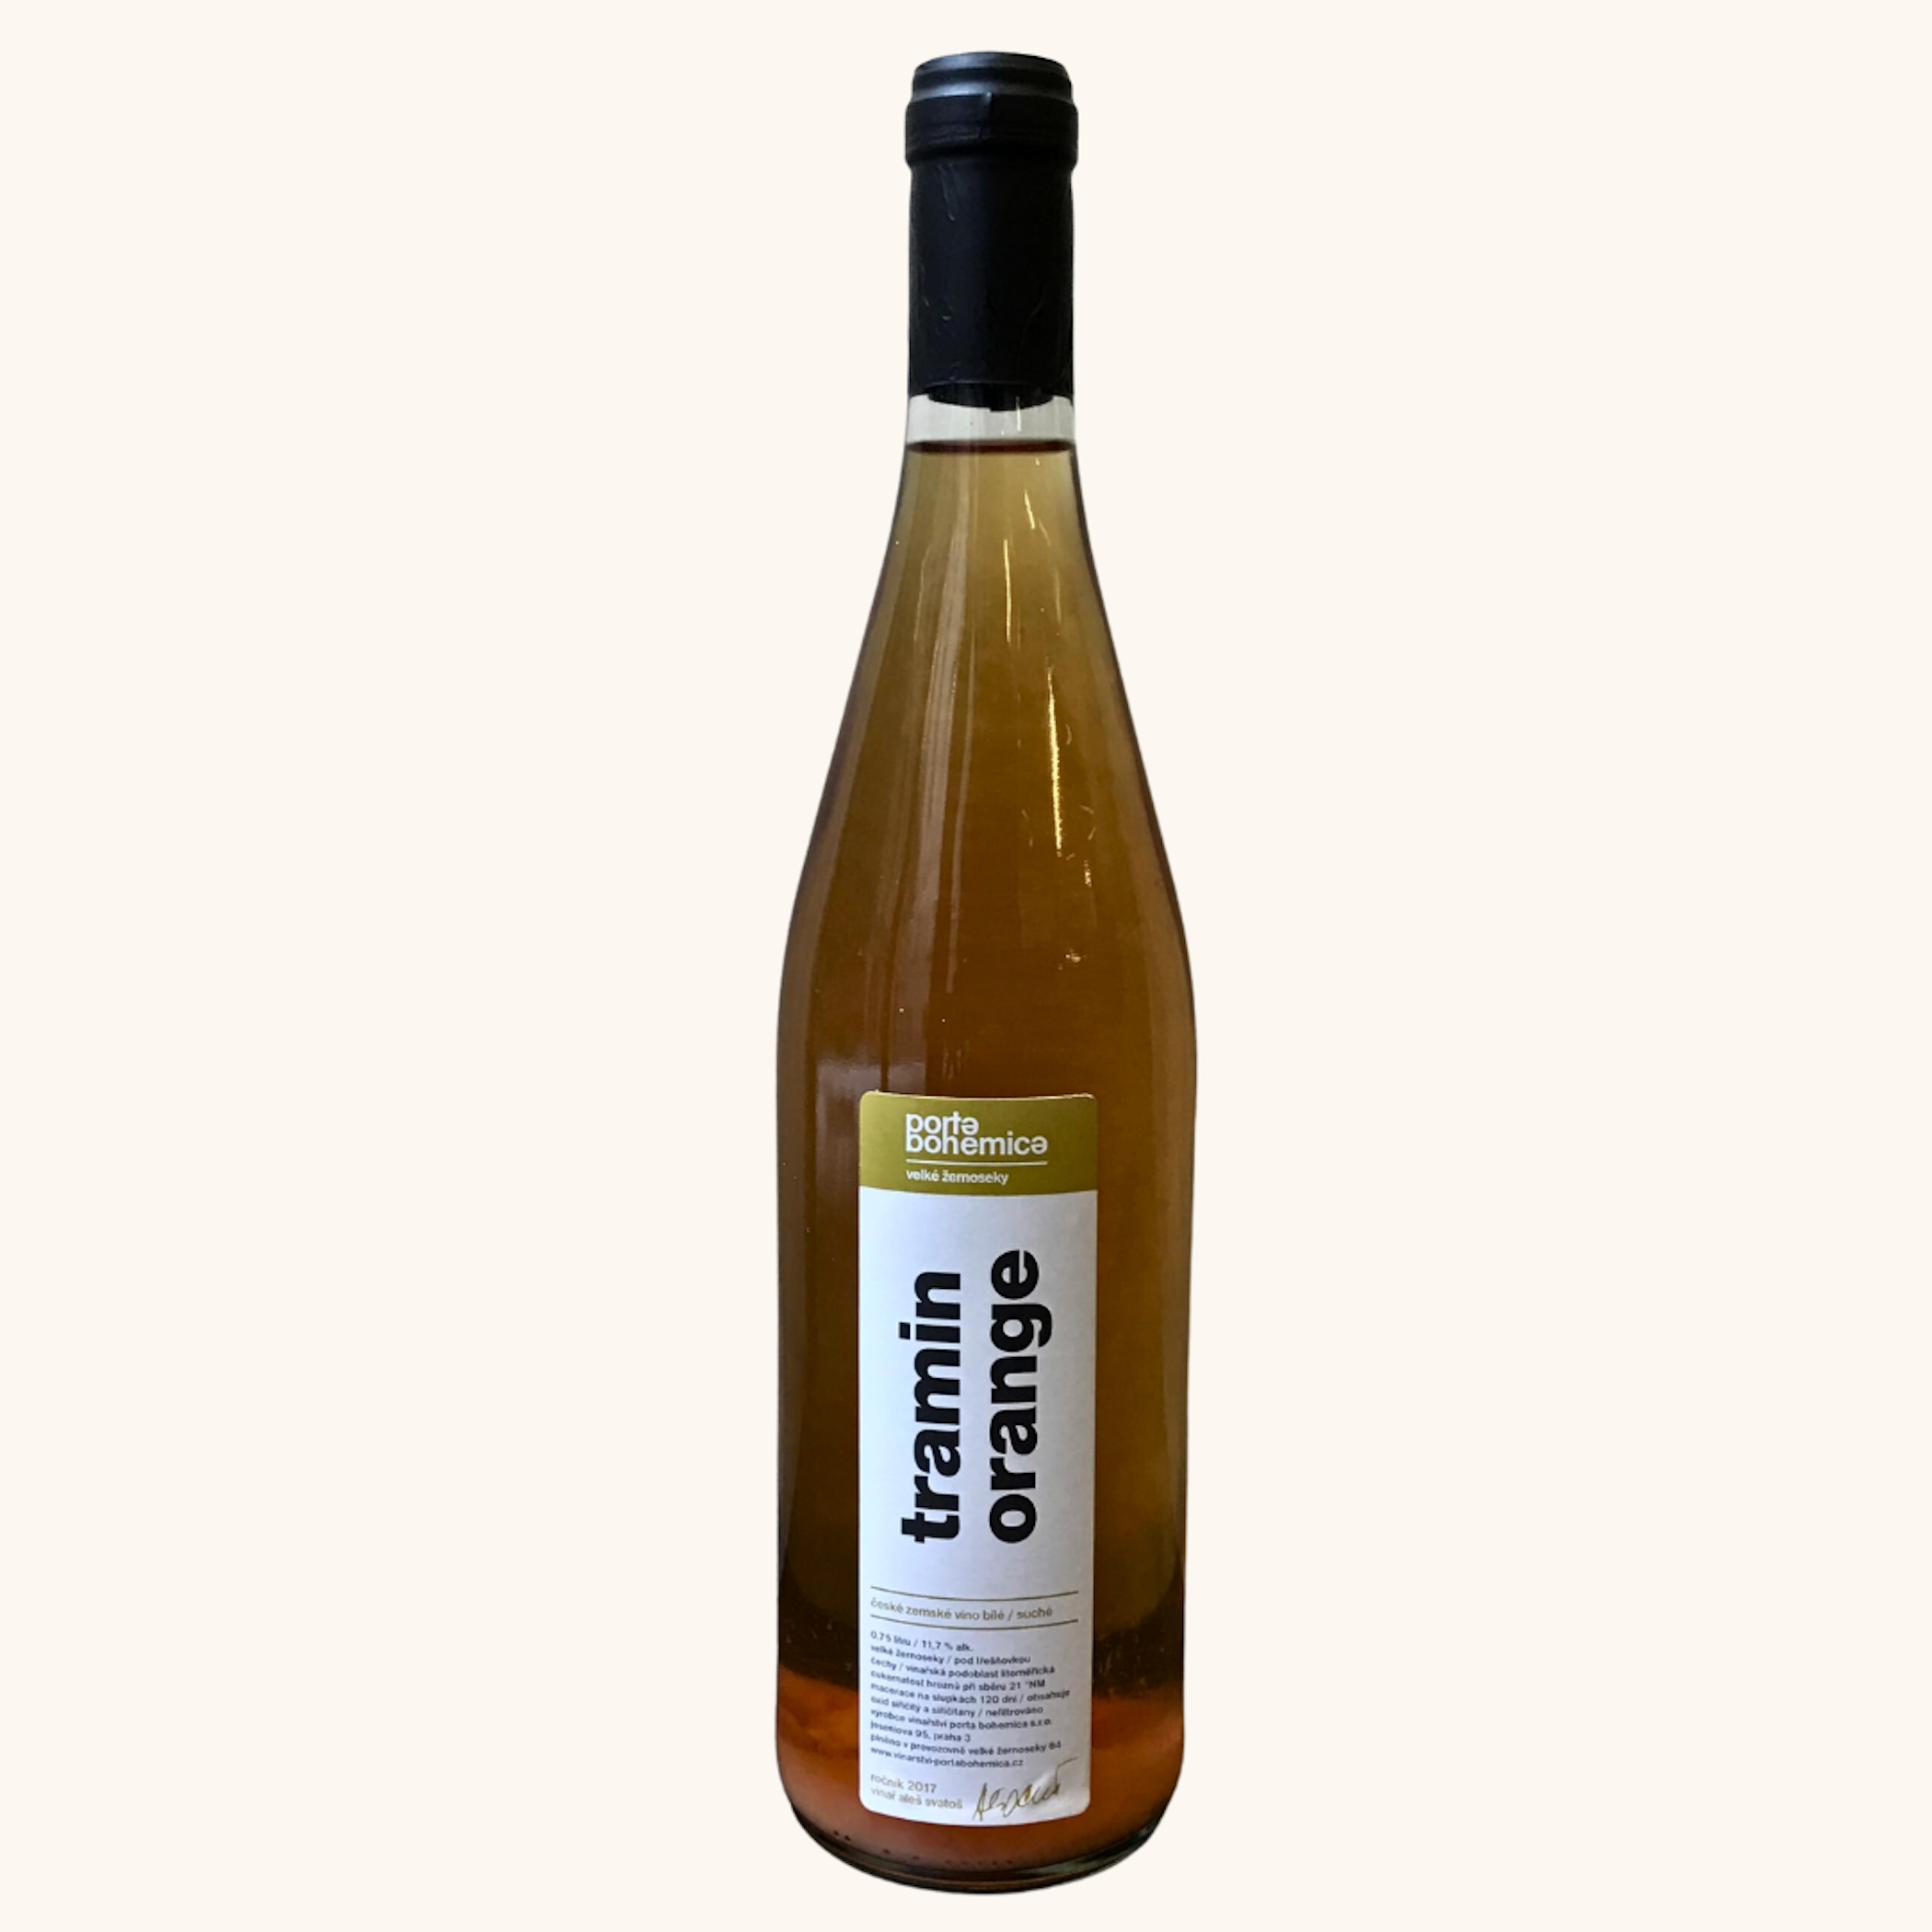 tramin-orange-porta-bohemica--natural-Orange-wine-Morava-Czech Republic